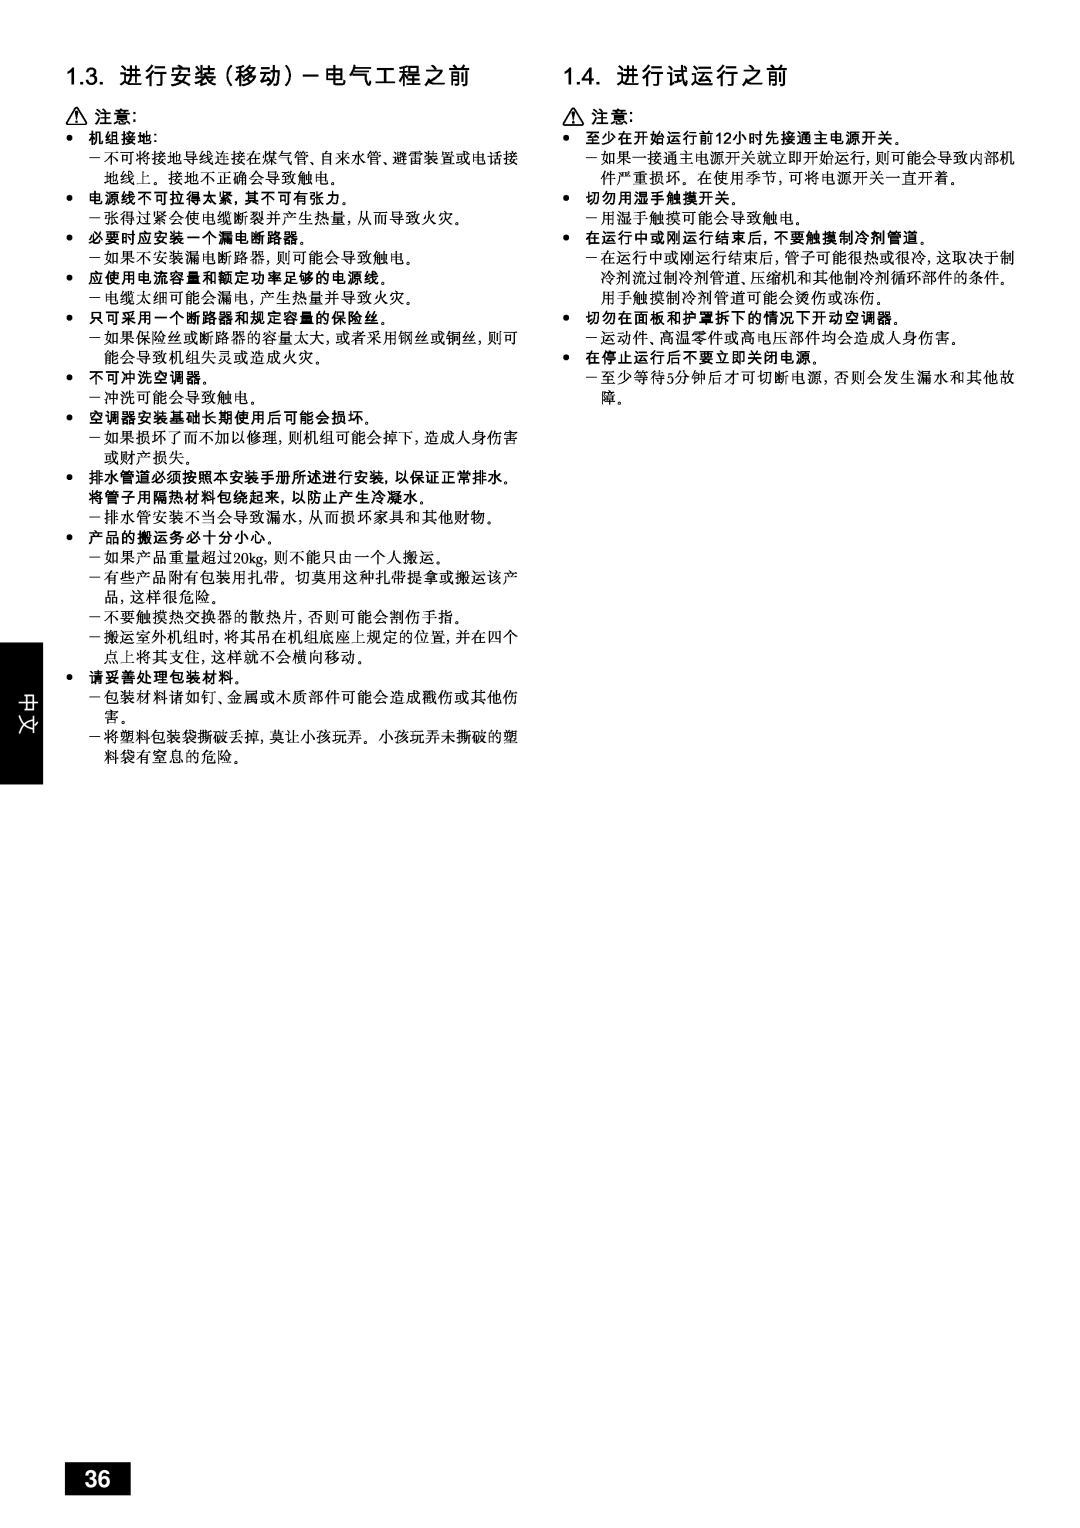 Mitsubishi Electronics PUHY-YMC installation manual Nkpk#$%&*+, Nkqk 